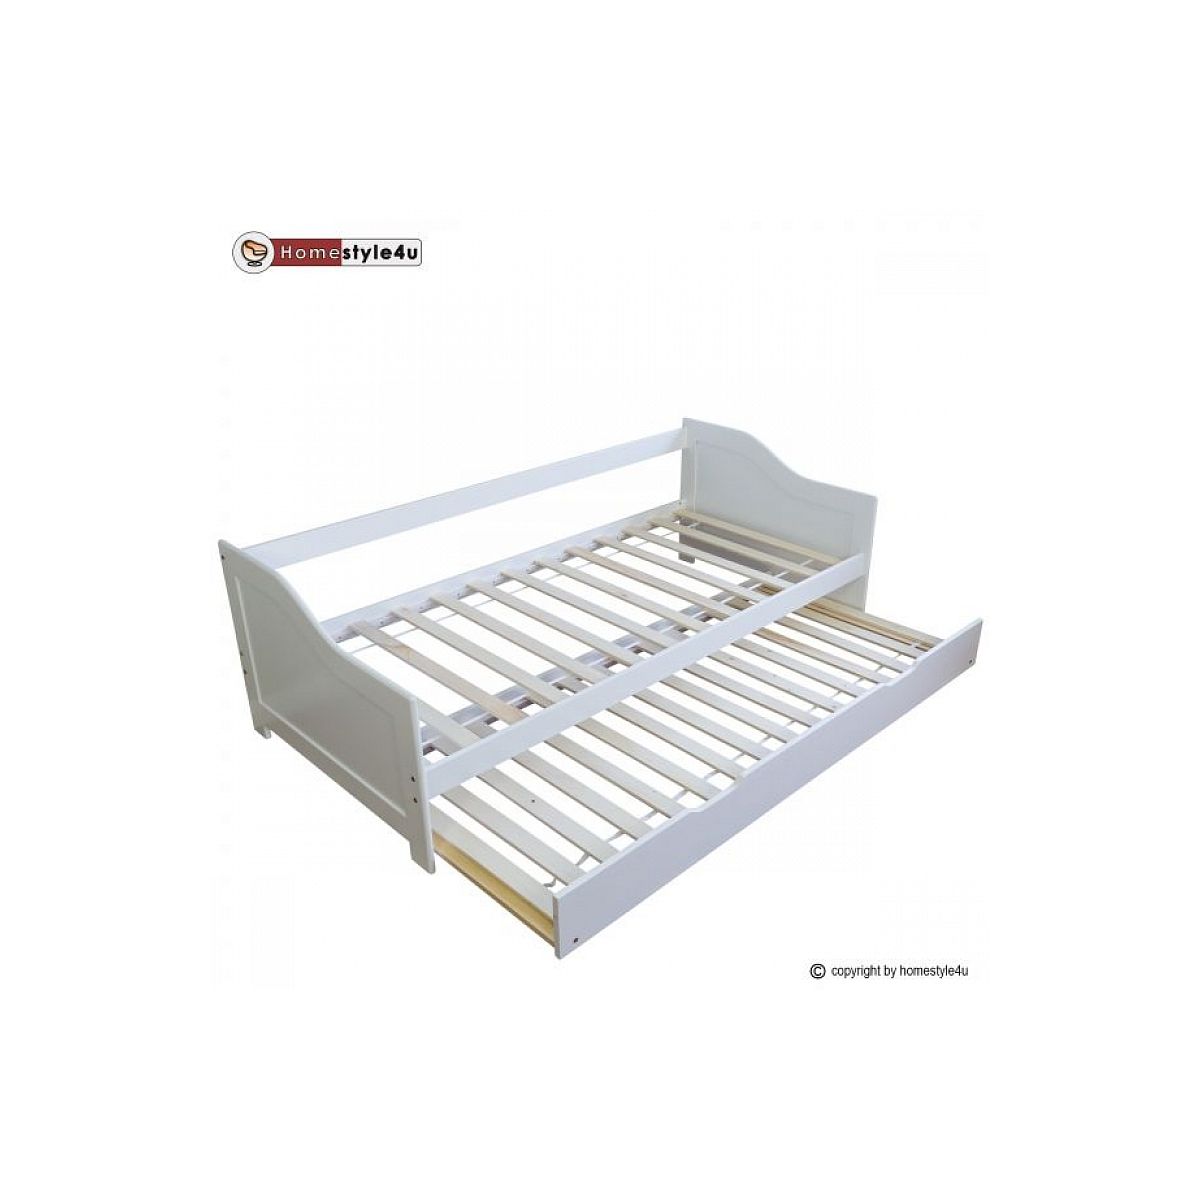 HomeStyle4U Lit Simple Blanc 90x200 avec tiroir lit